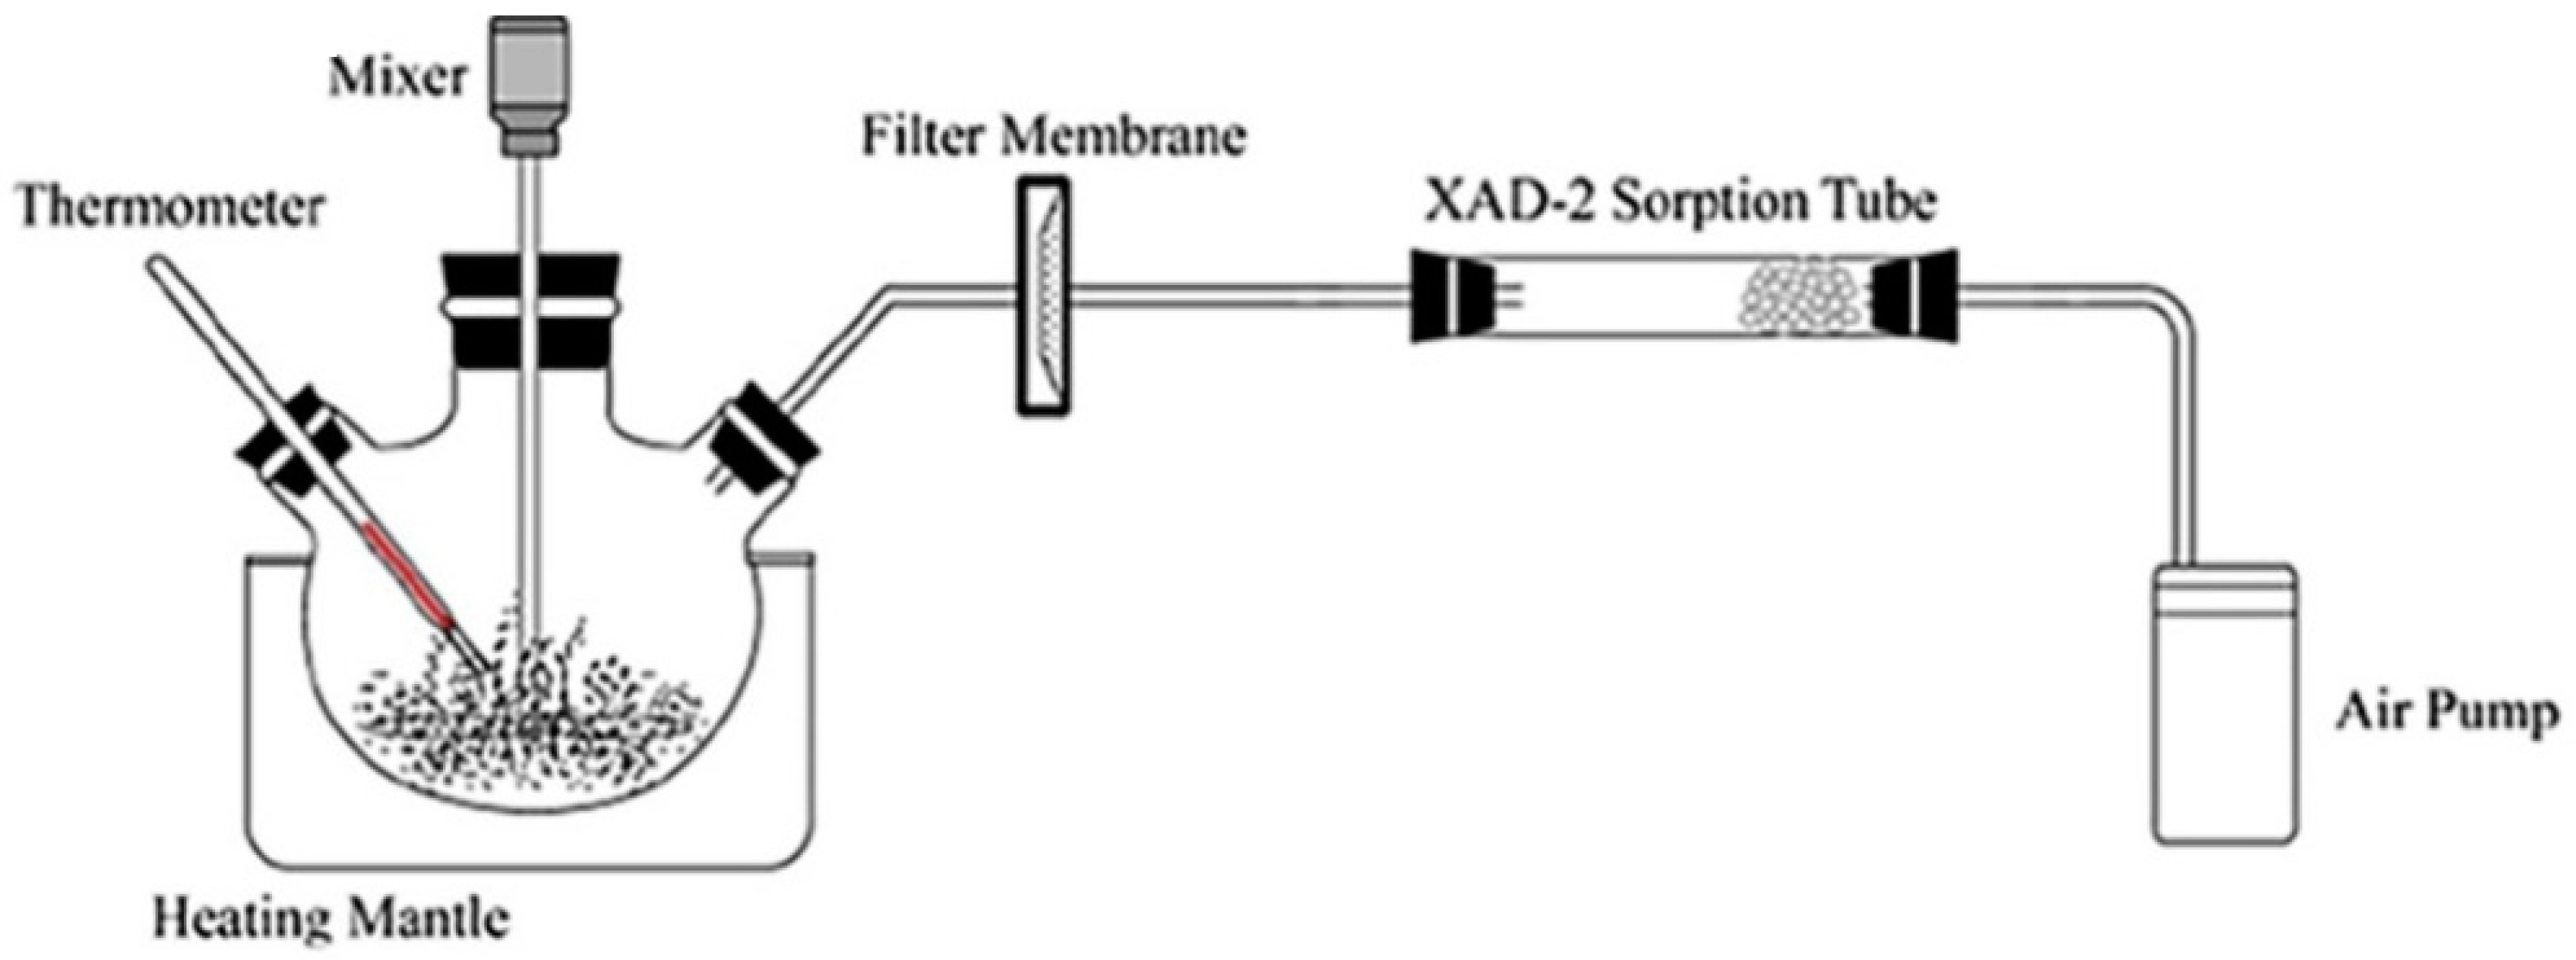 Parts List Thermo Scientific (Sep 23 2010), PDF, Syringe